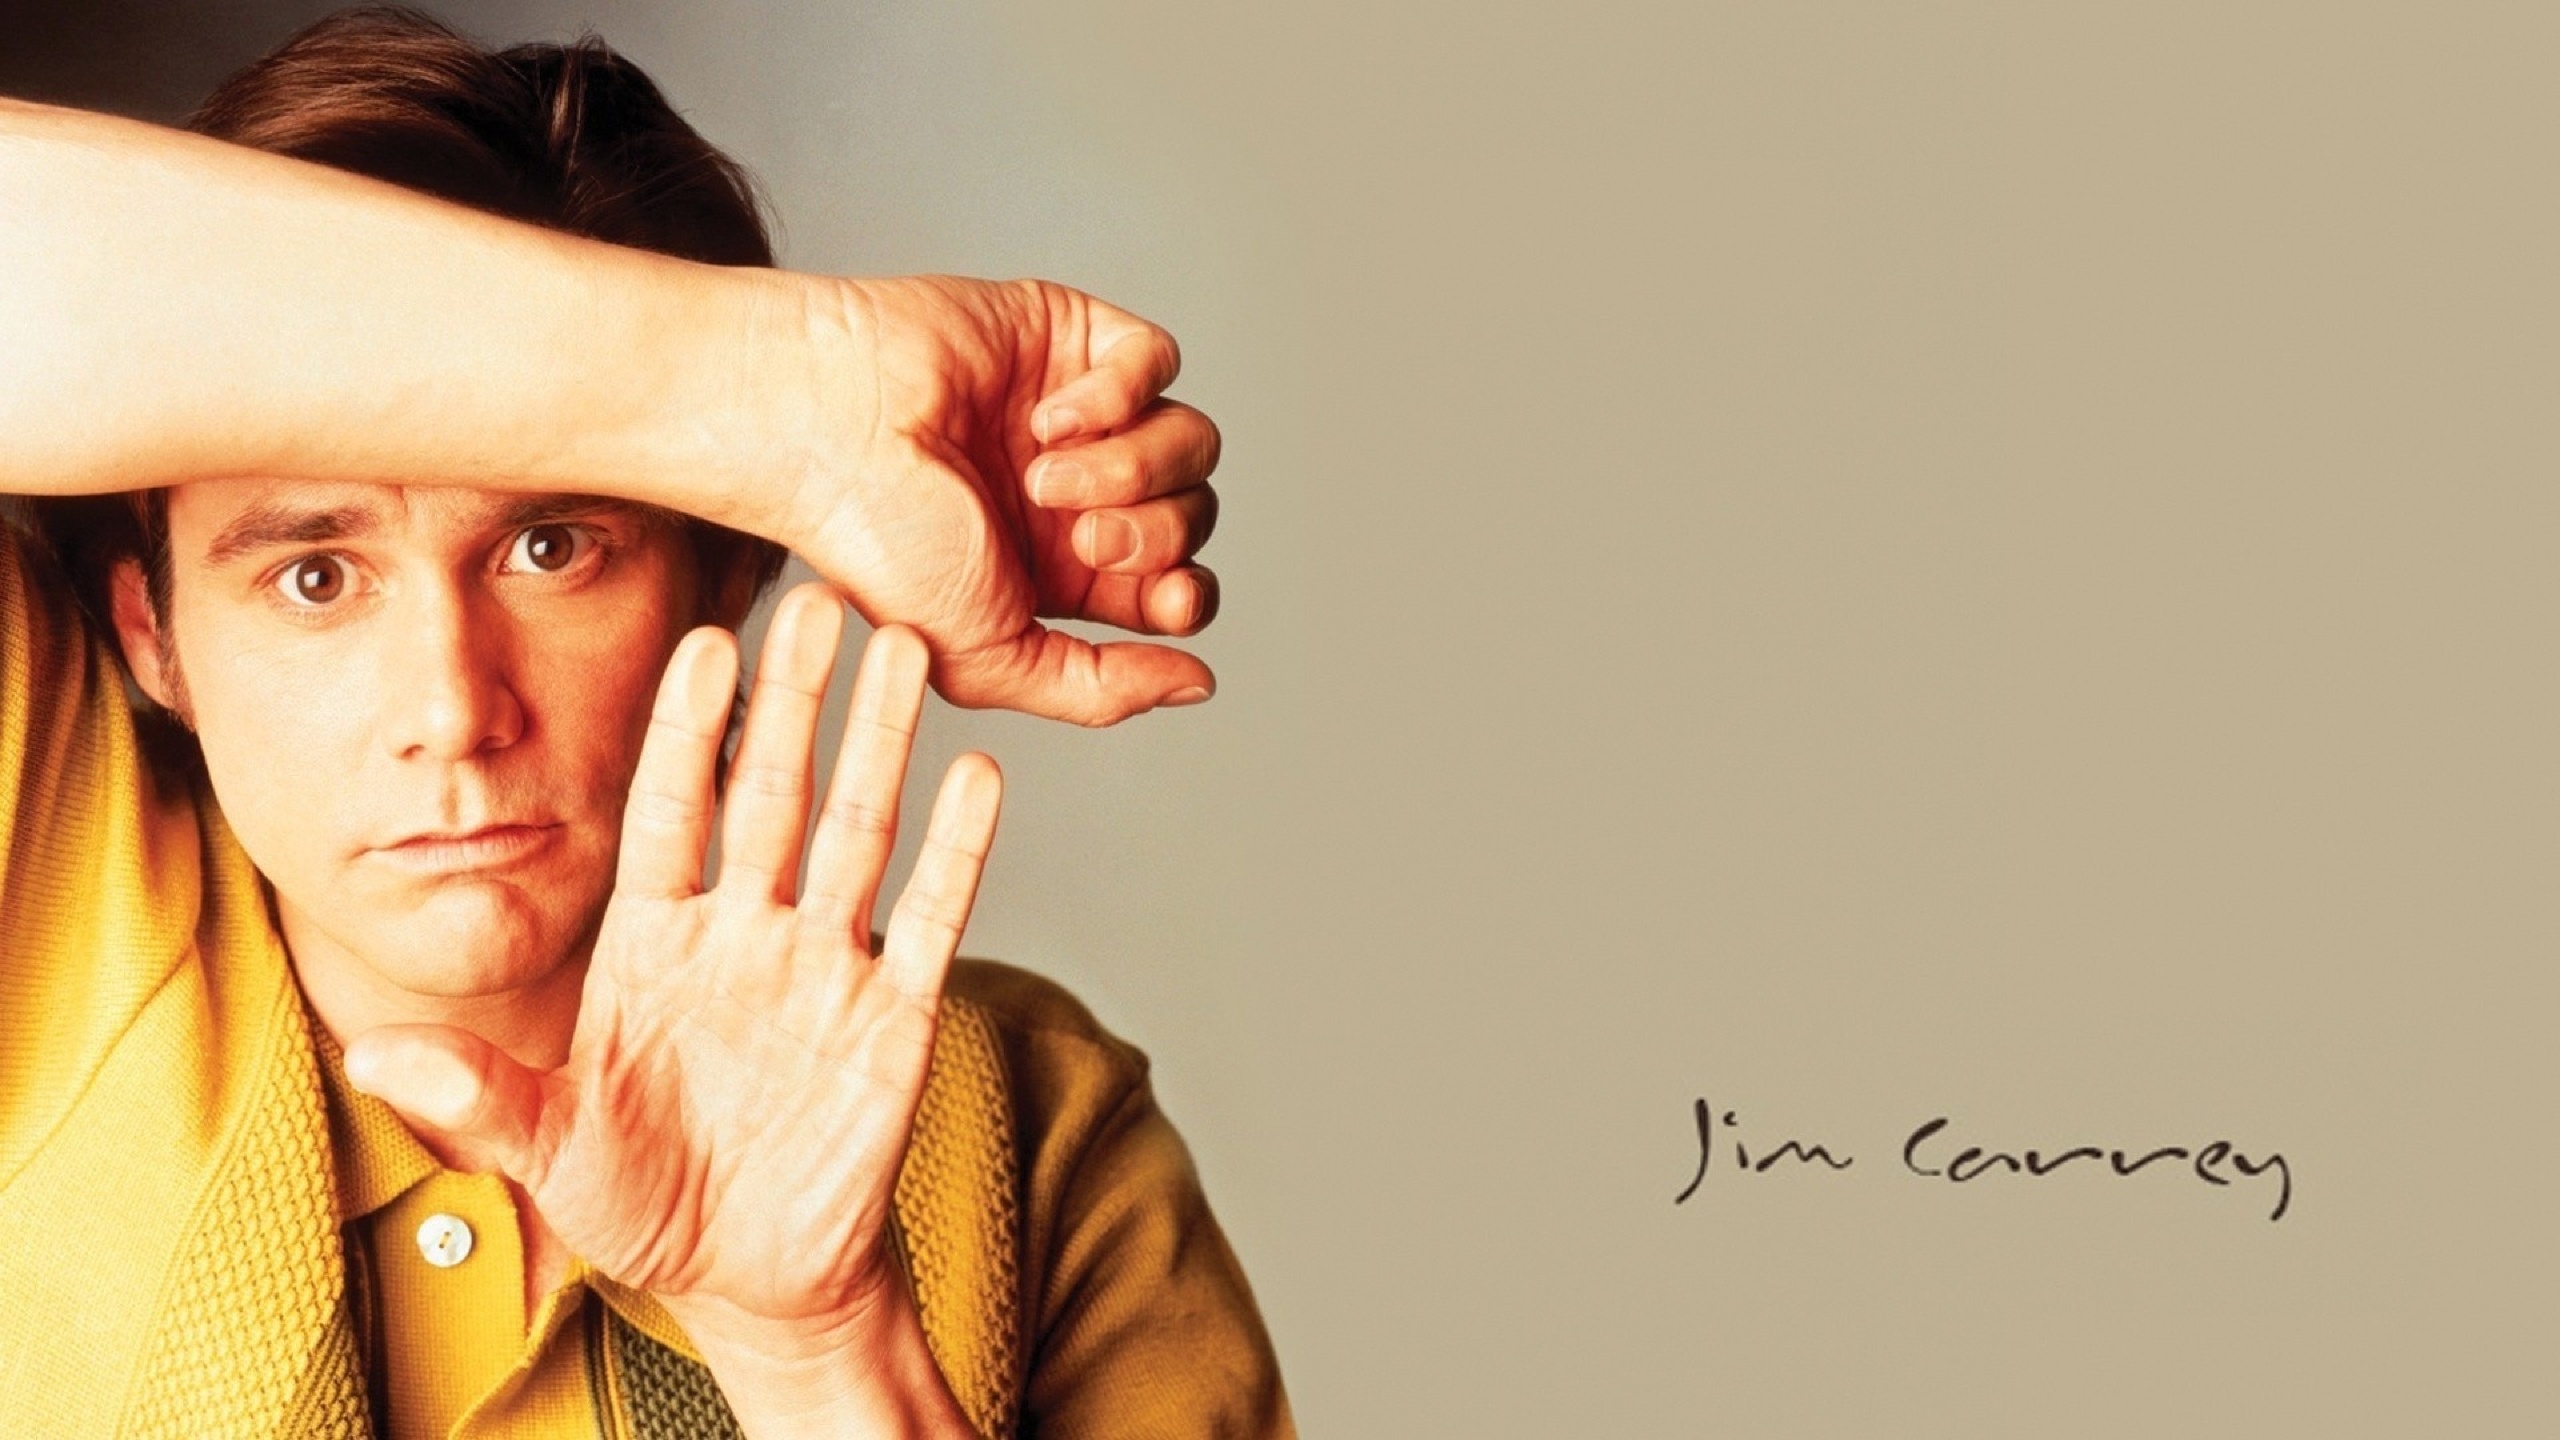 Jim Carrey New Image 1440p Resolution Wallpaper HD